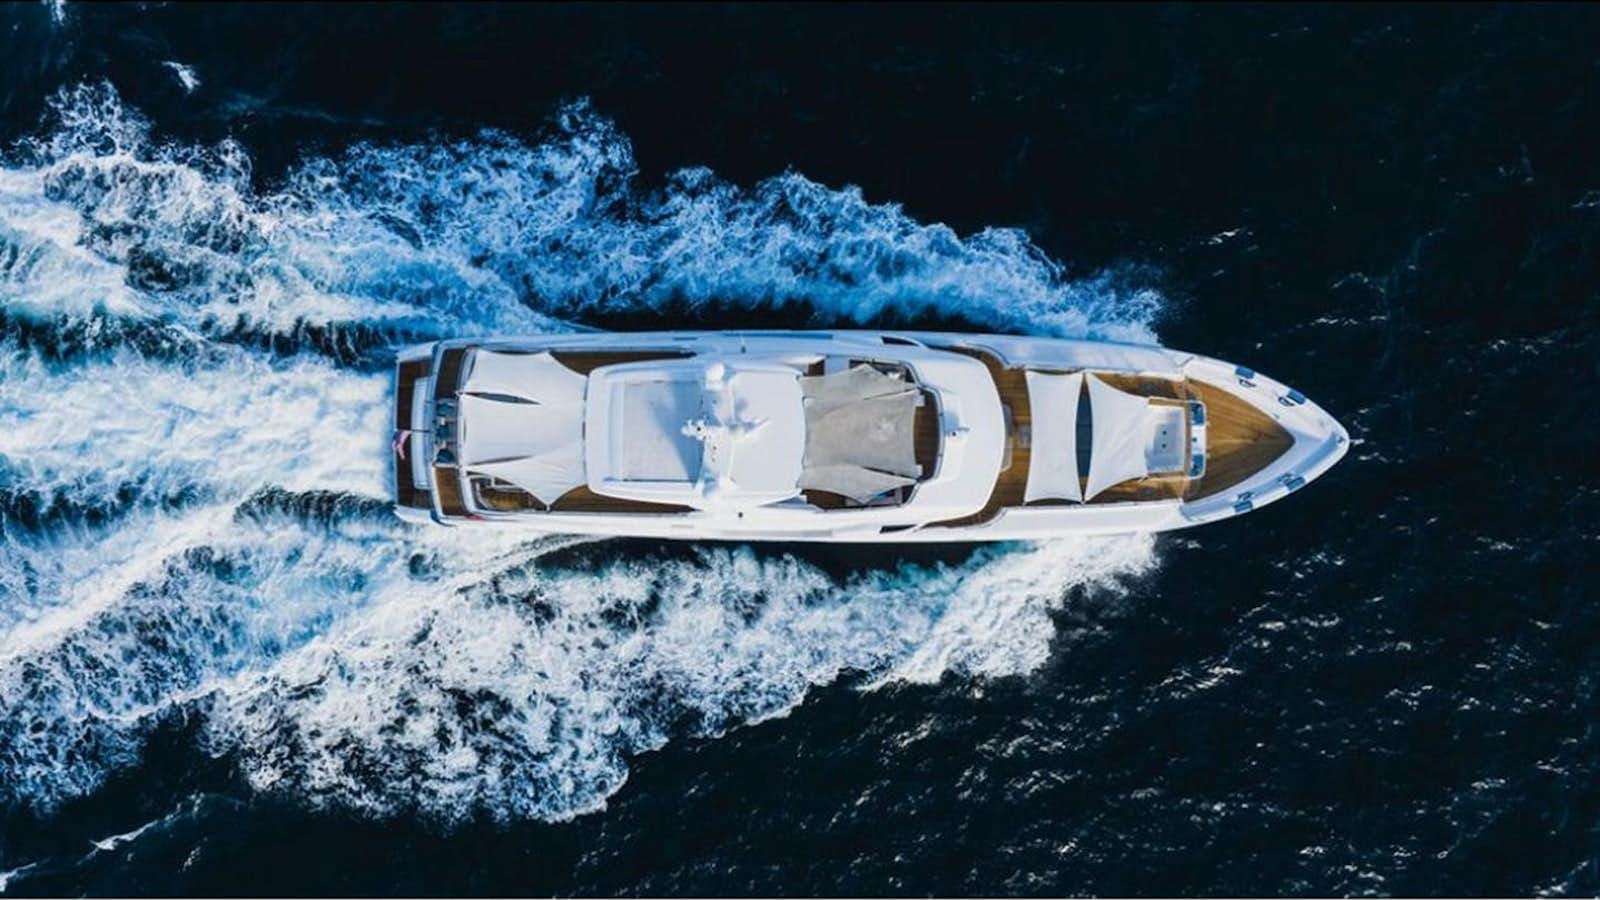 Abbentures iii
Yacht for Sale